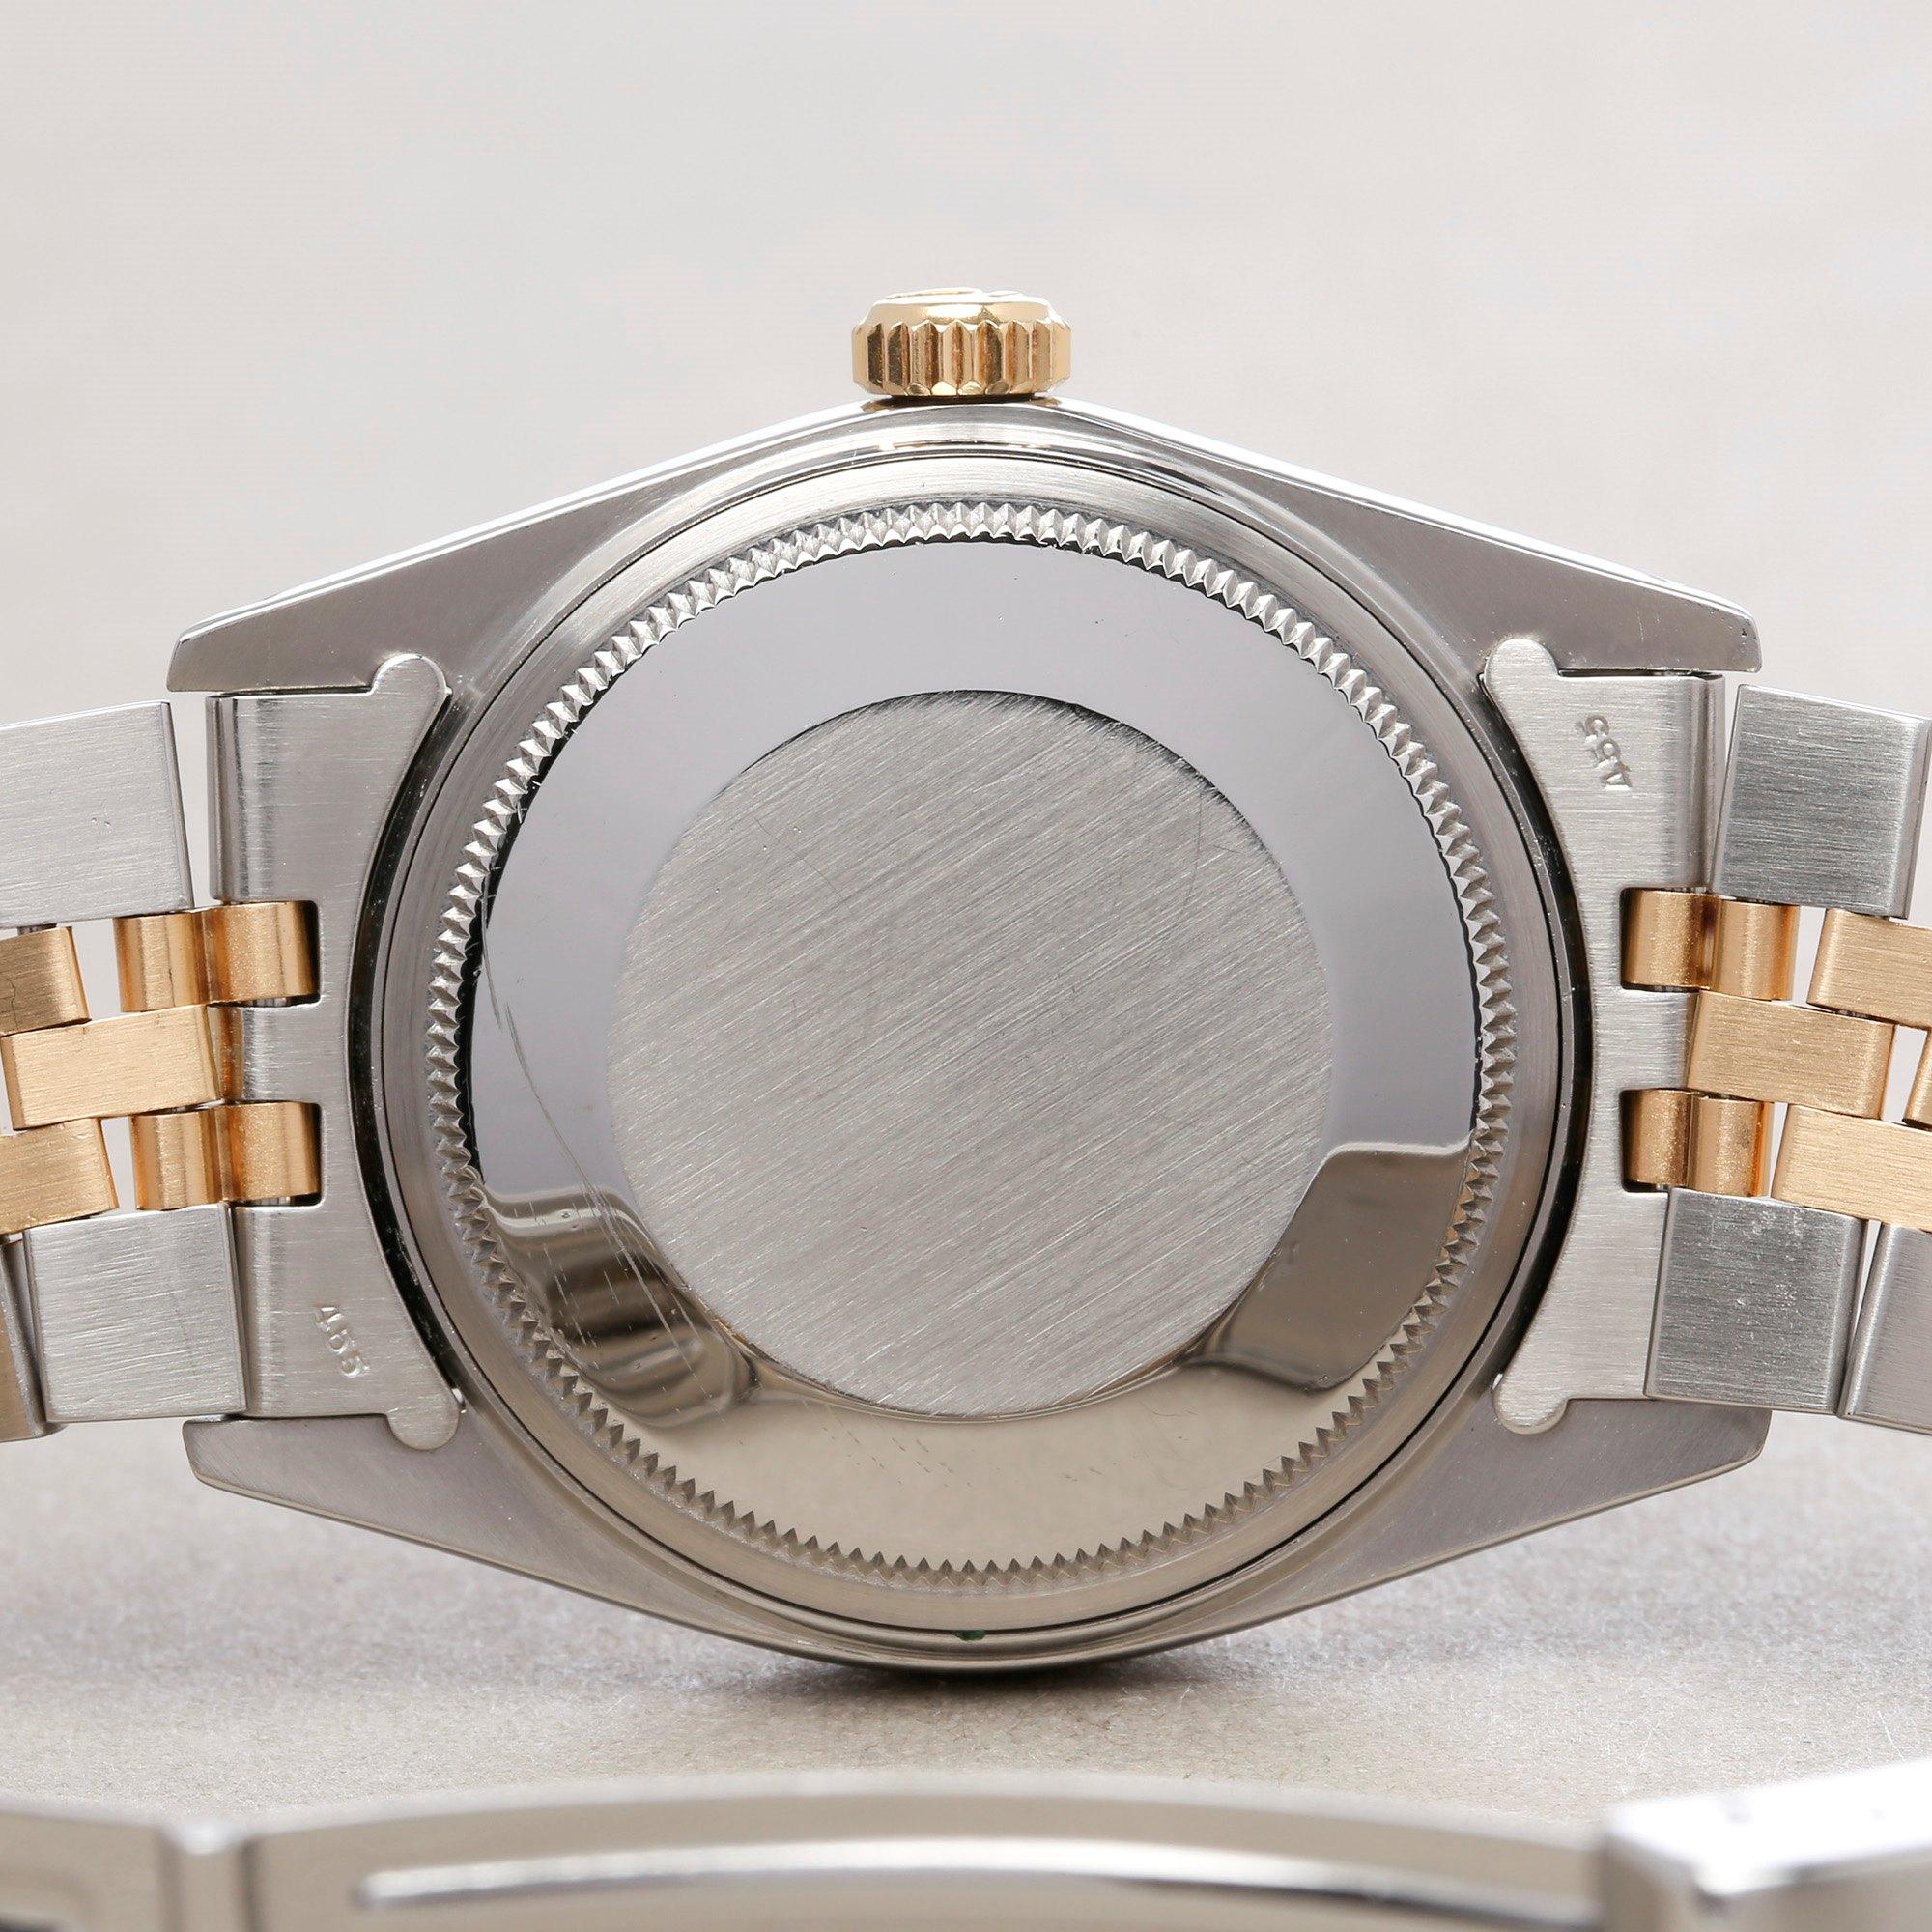 Rolex Datejust 36 16013 Unisex Yellow Gold & Stainless Steel Watch 5